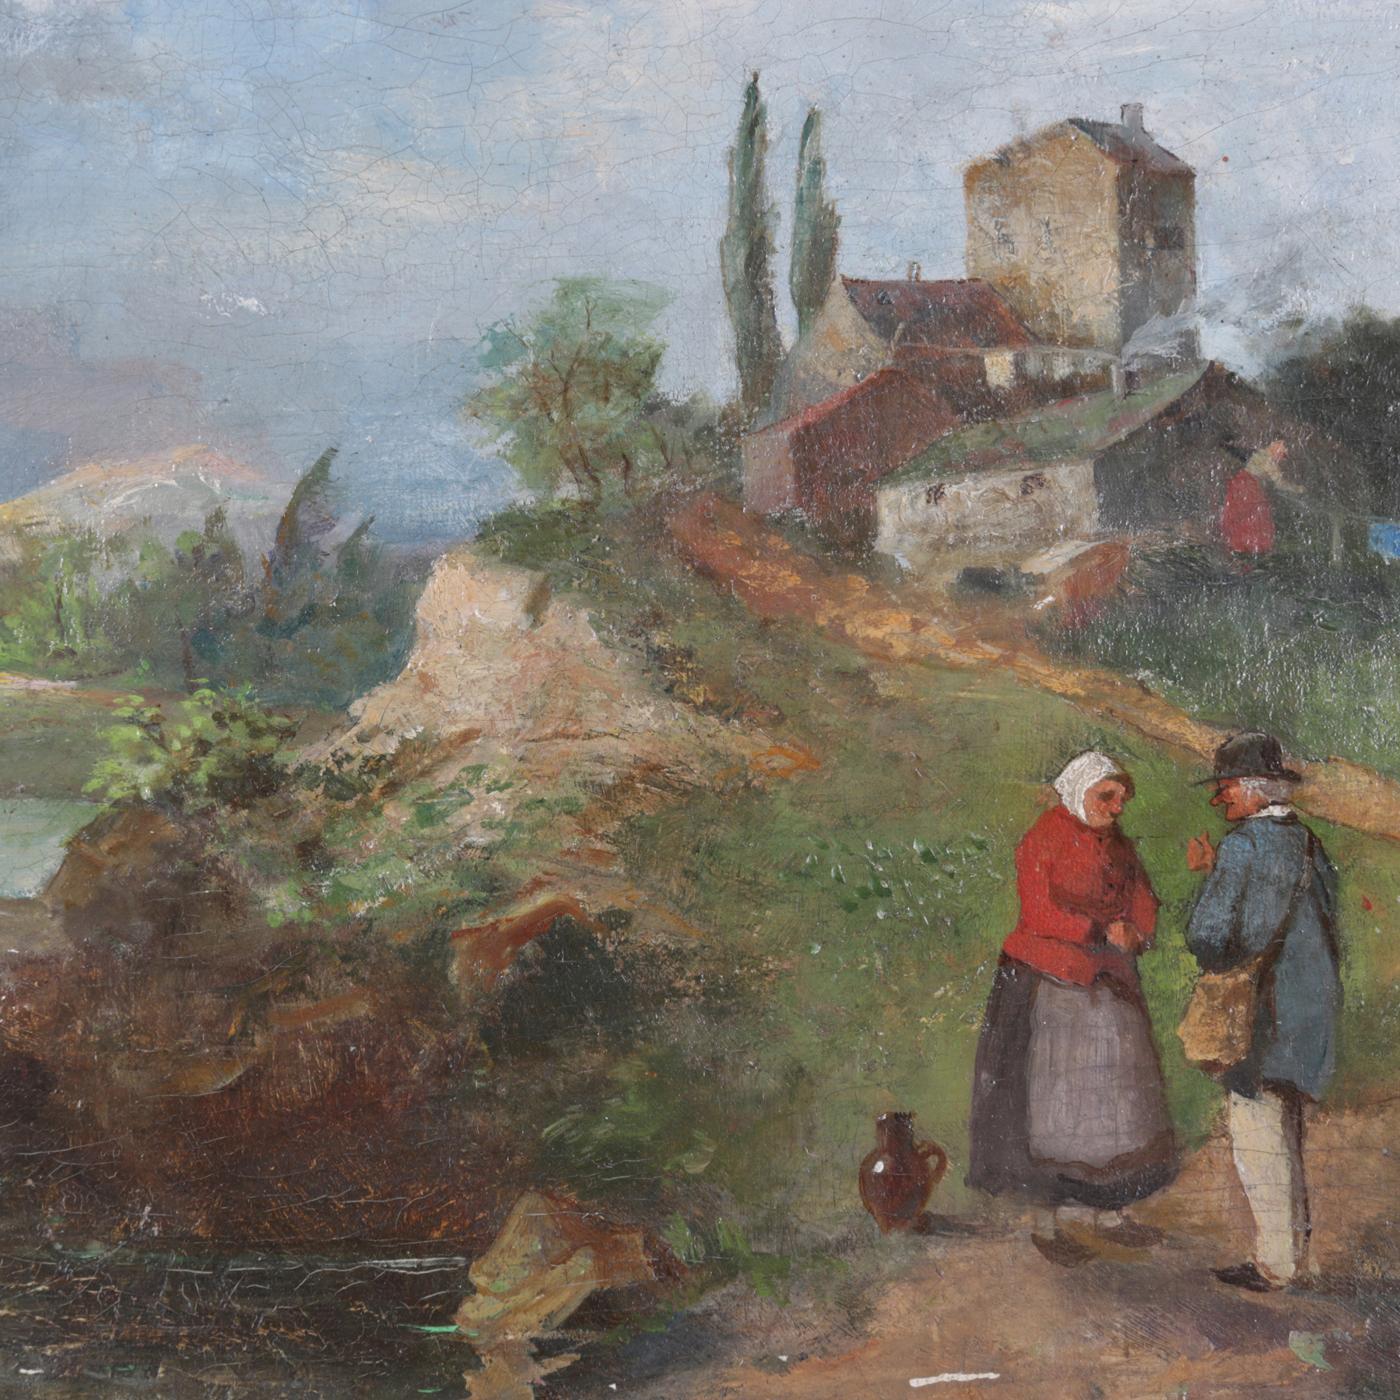 Antique Oil on Canvas Landscape Painting with Farm & Figures, 19th Century 1